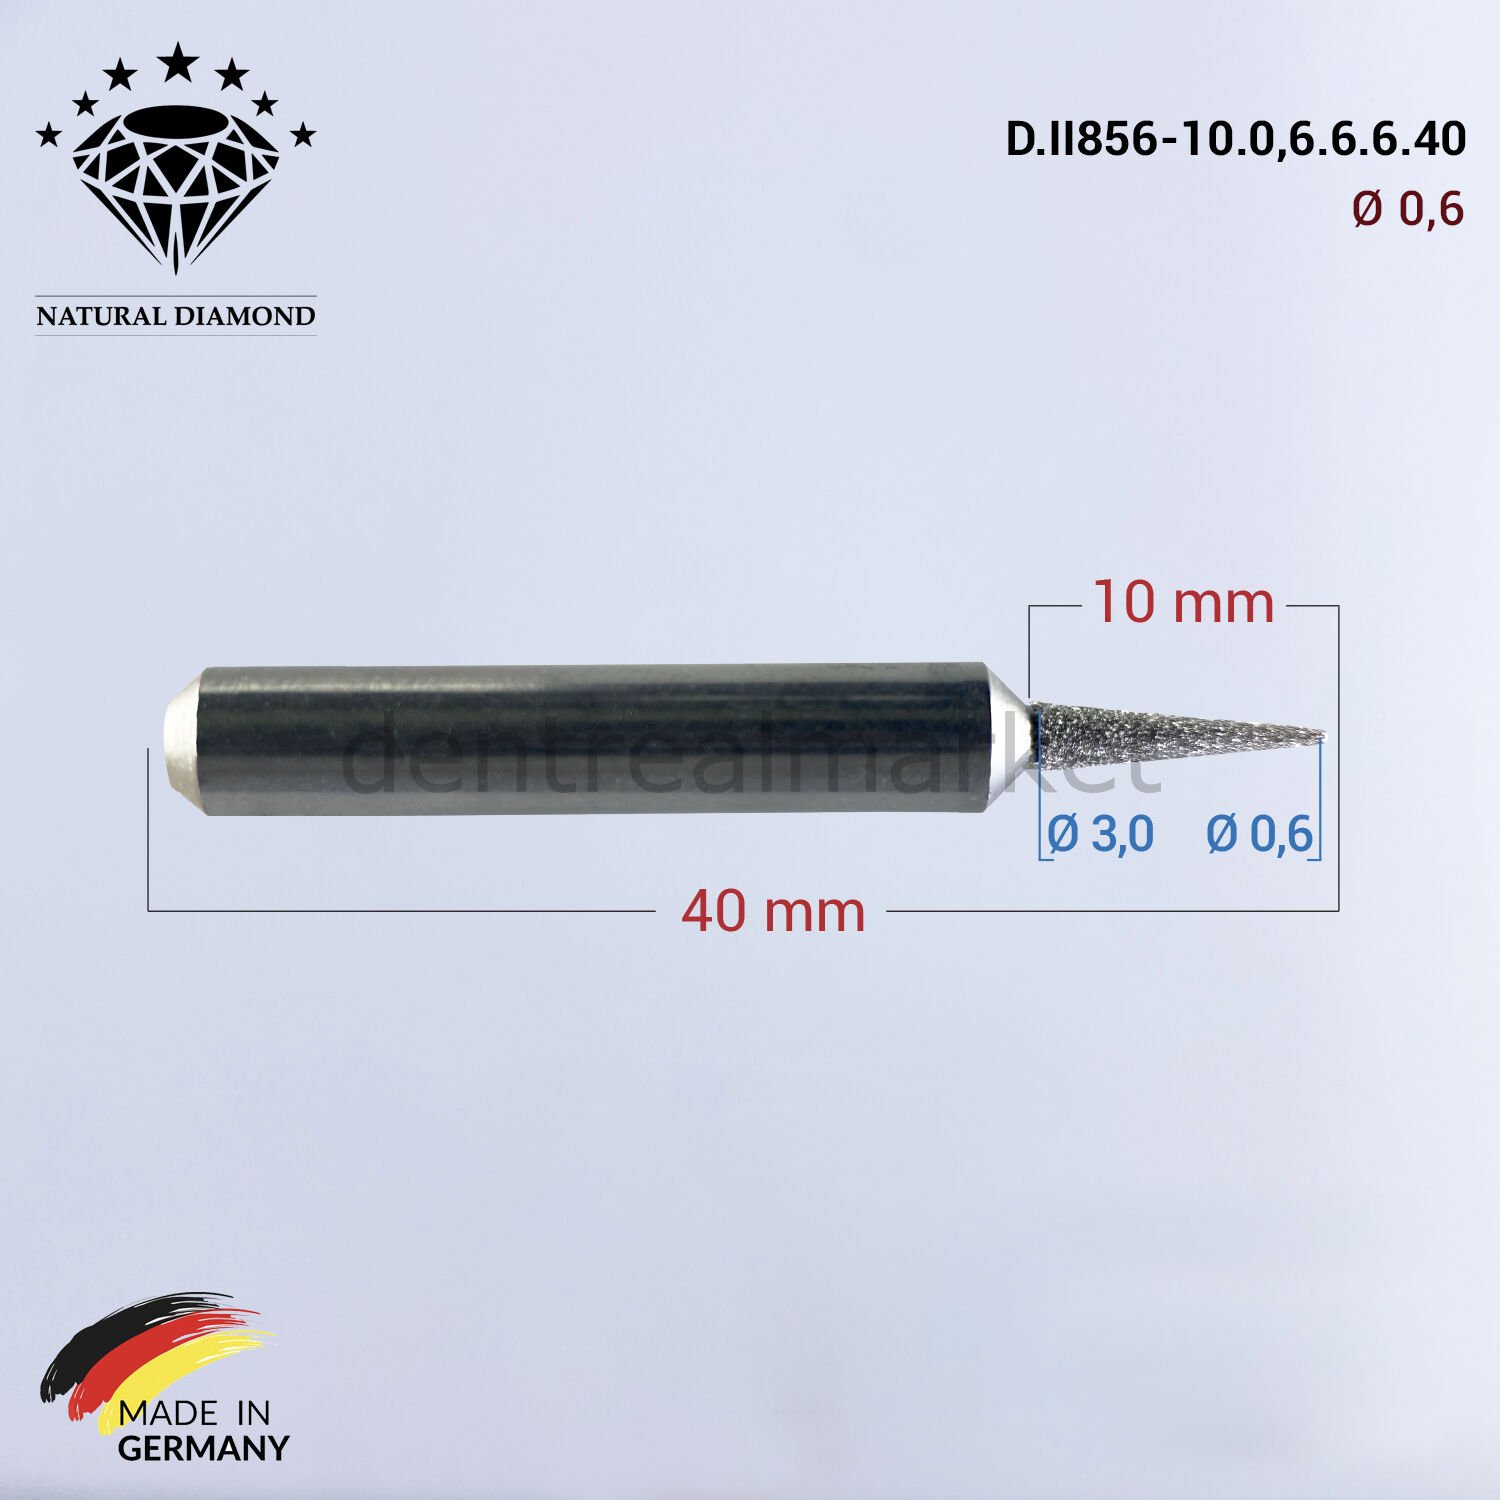 Imes Icore Wieland Elmas Cad Cam Drill 0,6 mm